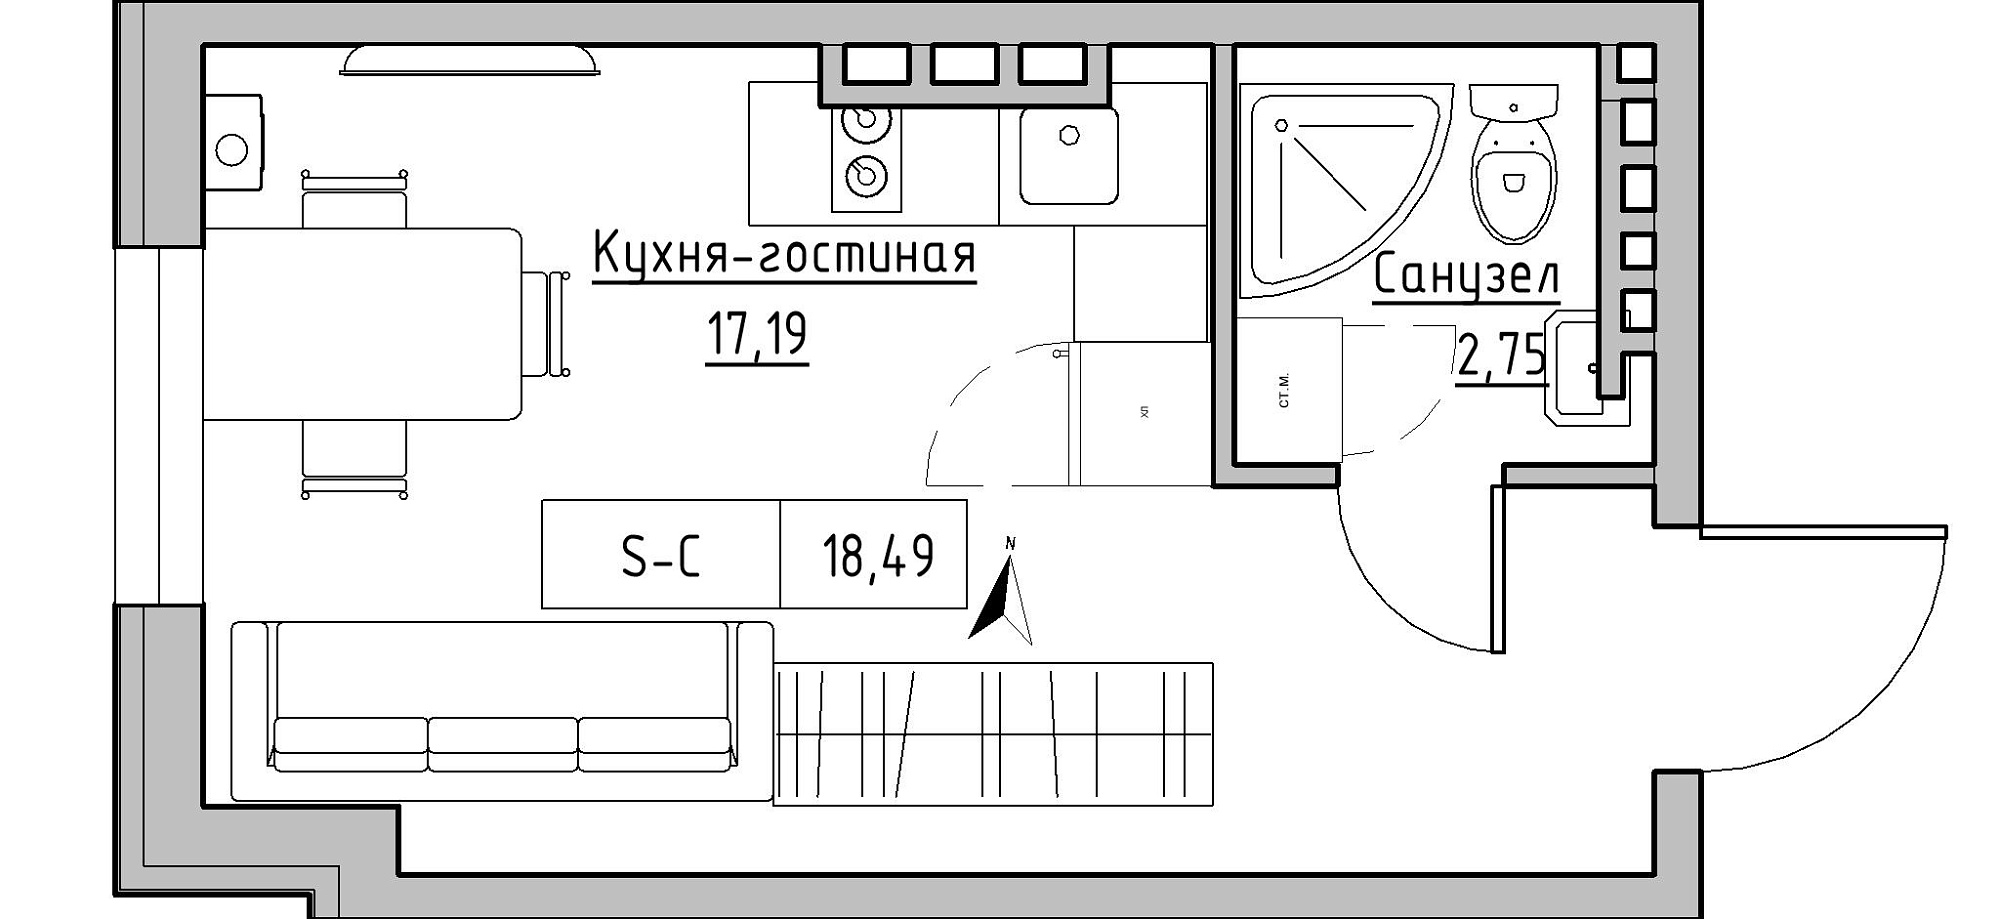 Планировка Smart-квартира площей 18.49м2, KS-024-05/0014.